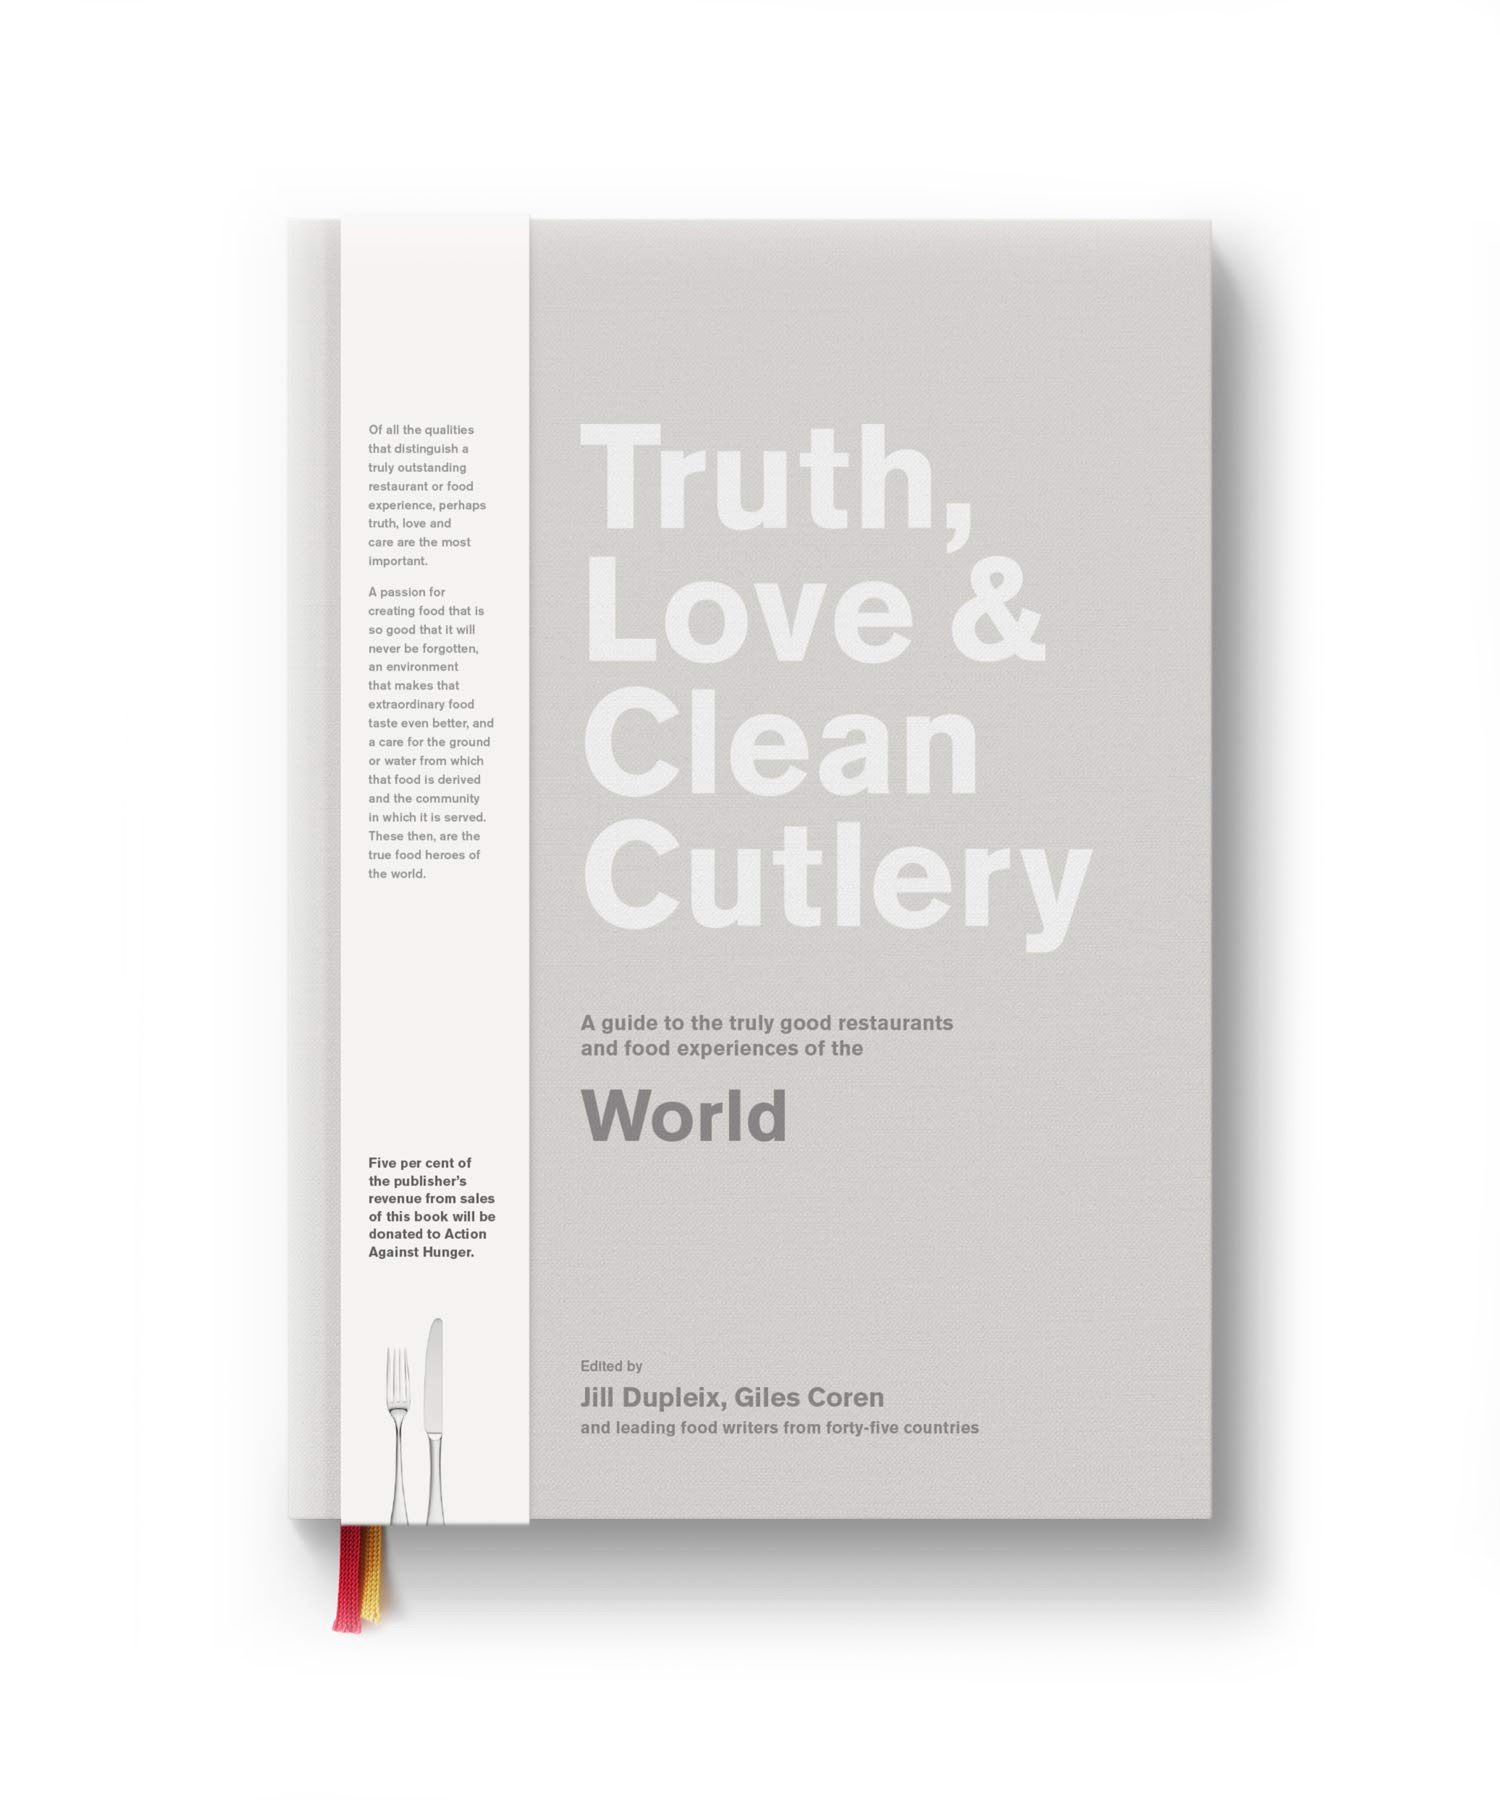 Truth, Love &amp; Clean Cutlery